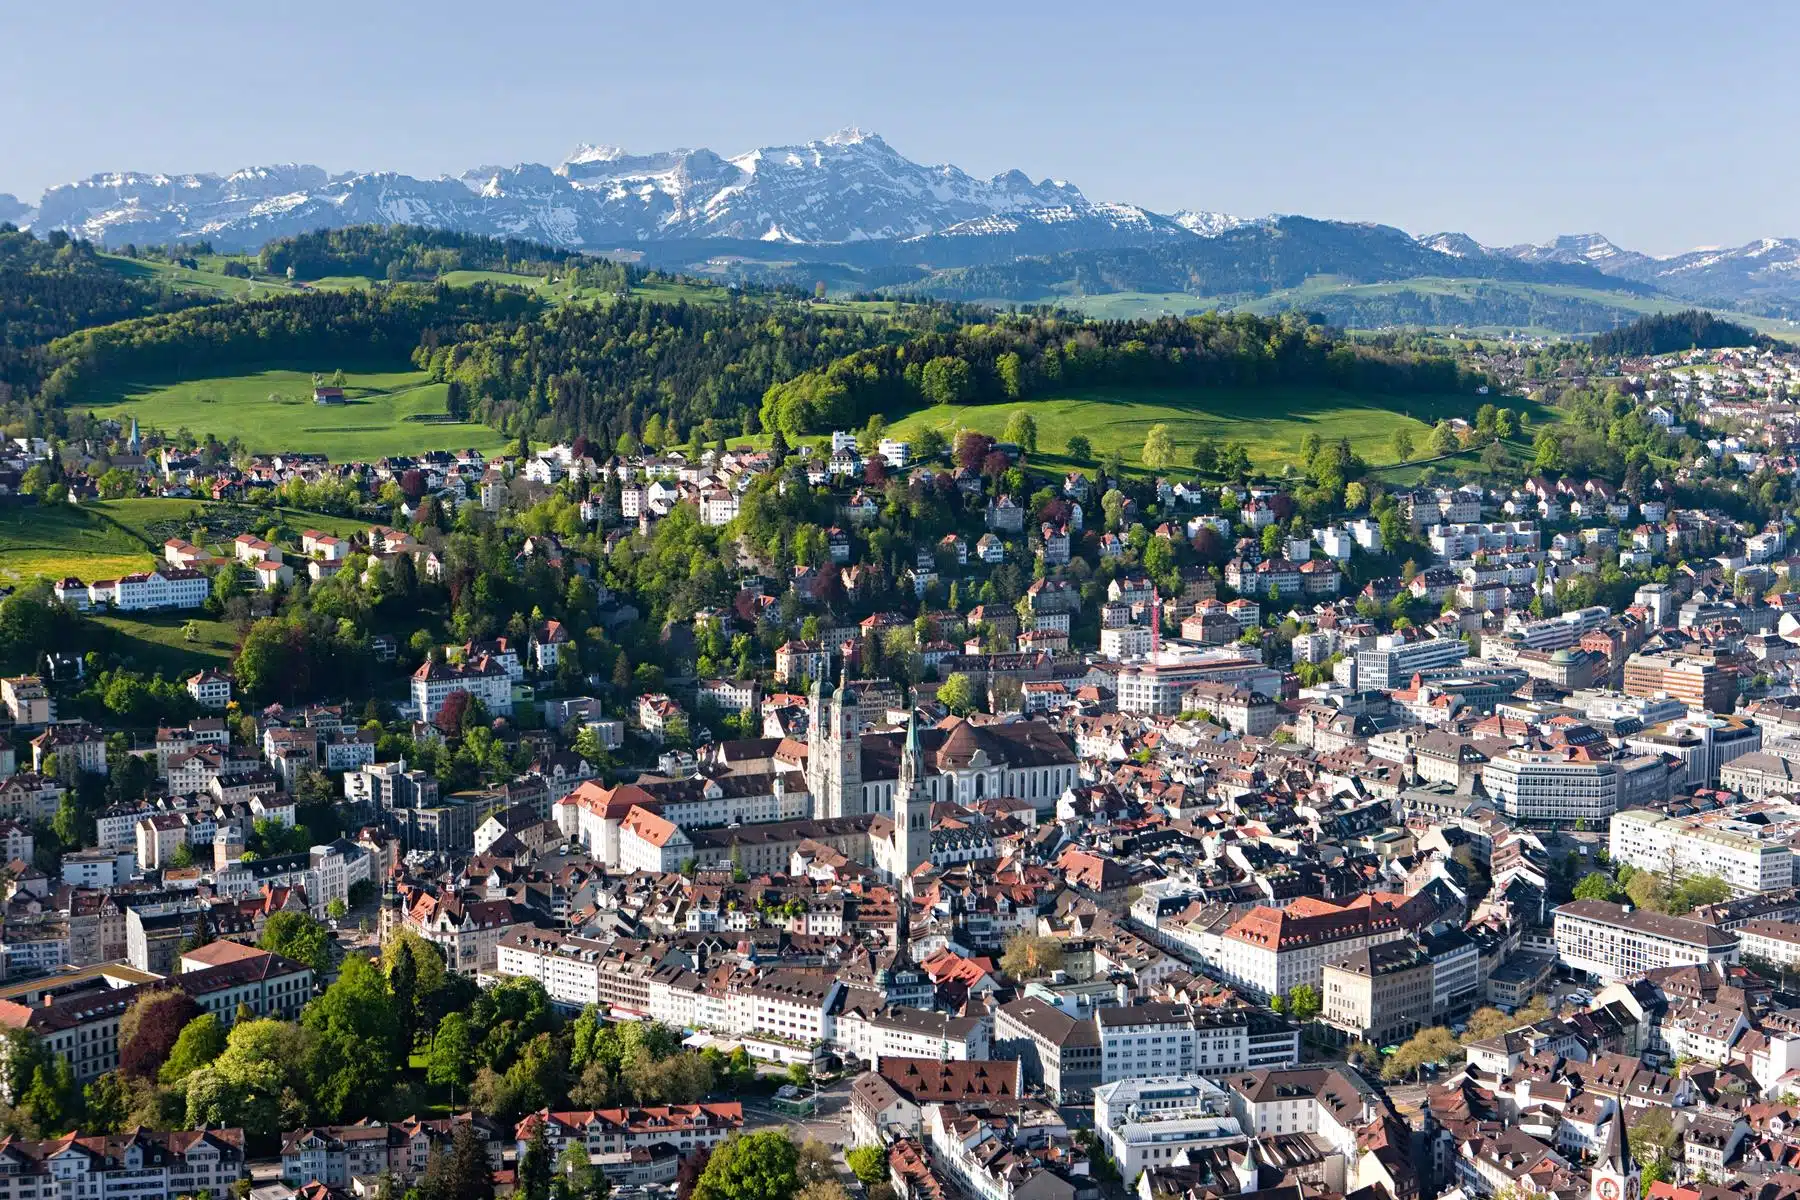 11 Important Attractions In St. Gallen